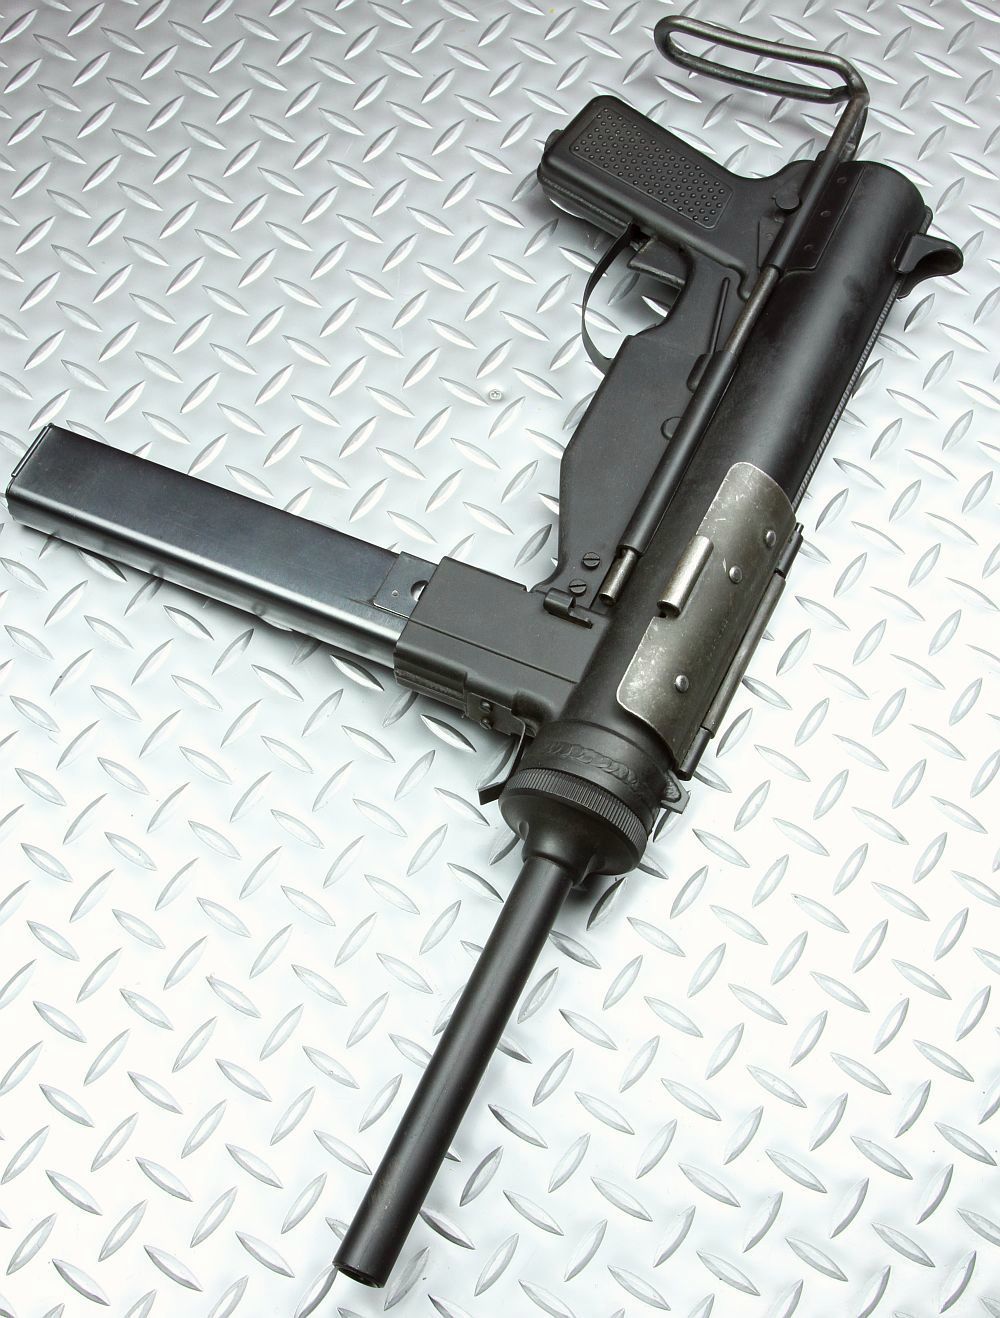 M3A1 Grease gun by Hudson : 